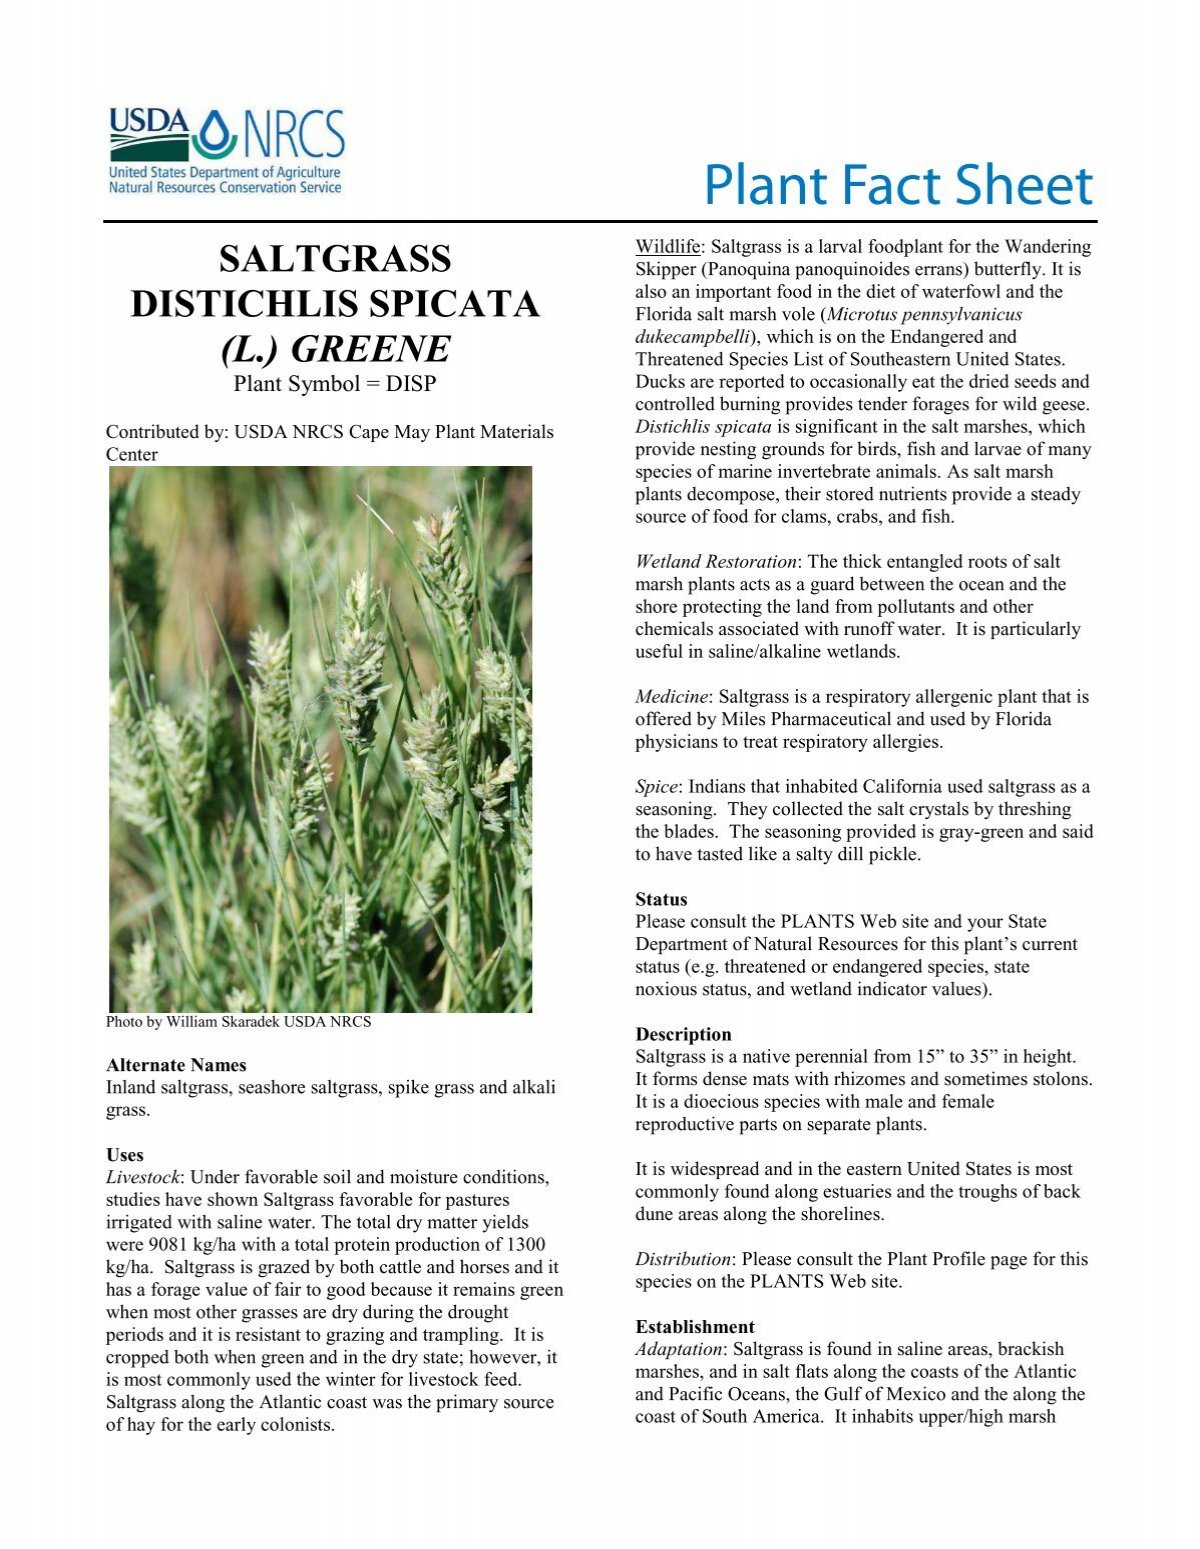 saltgrass-distichlis-spicata-plant-fact-sheet-usda-plants-database